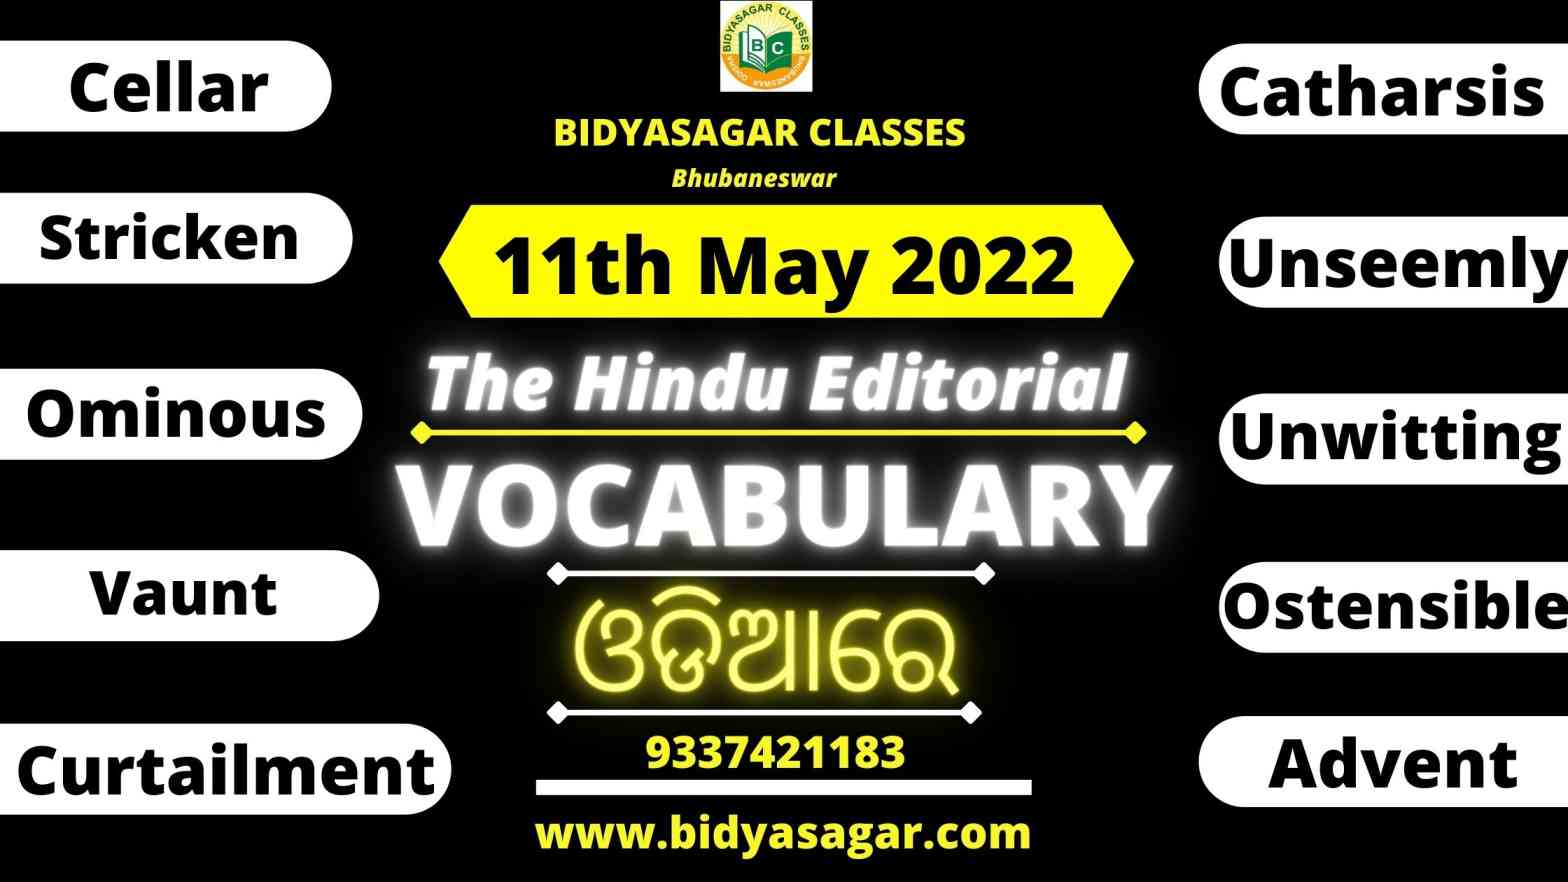 The Hindu Editorial Vocabulary of 11th May 2022